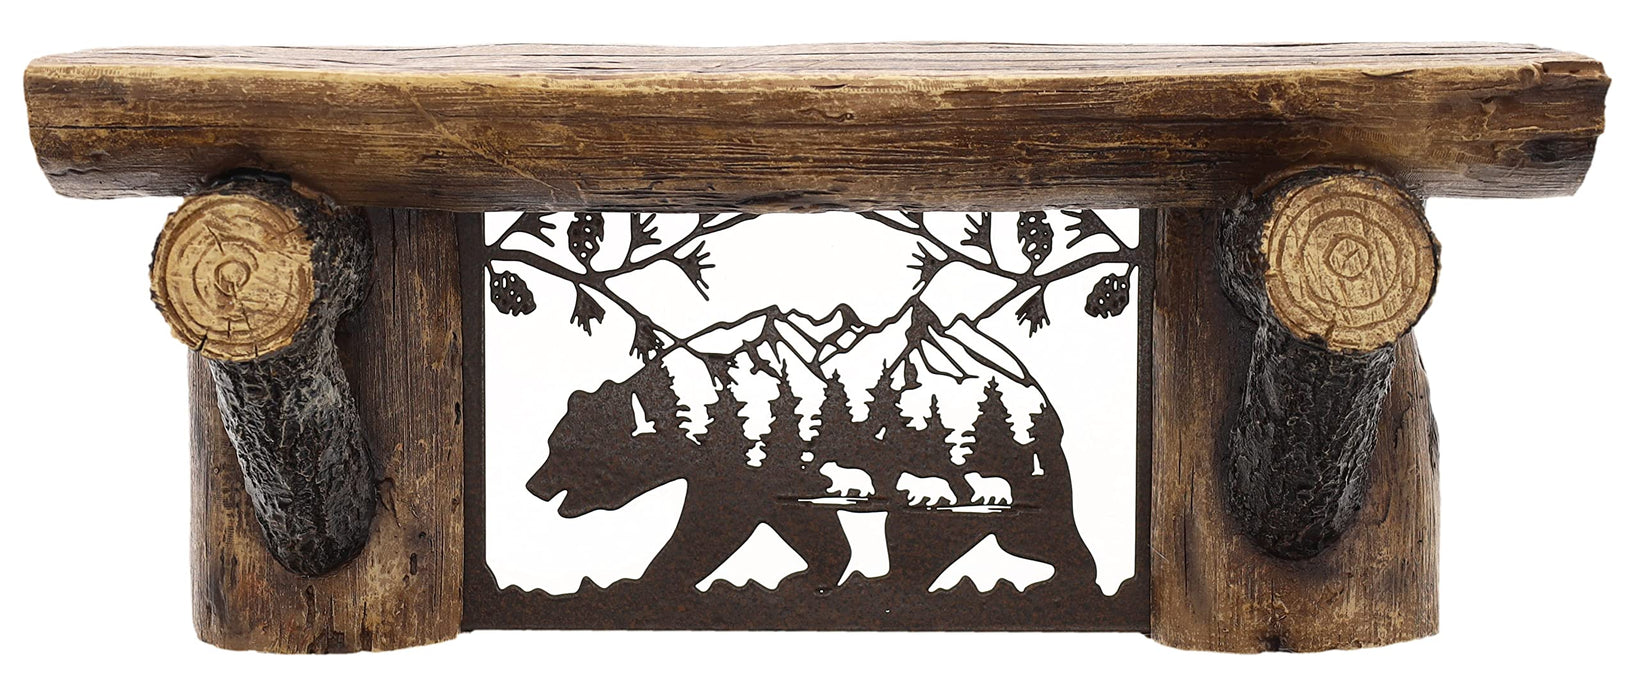 Top Brass Rustic Wooden Sawn Log Look Wall Shelf with Metal Bear Wilderness Art Scene Unique Design Cabin, Lodge Decor